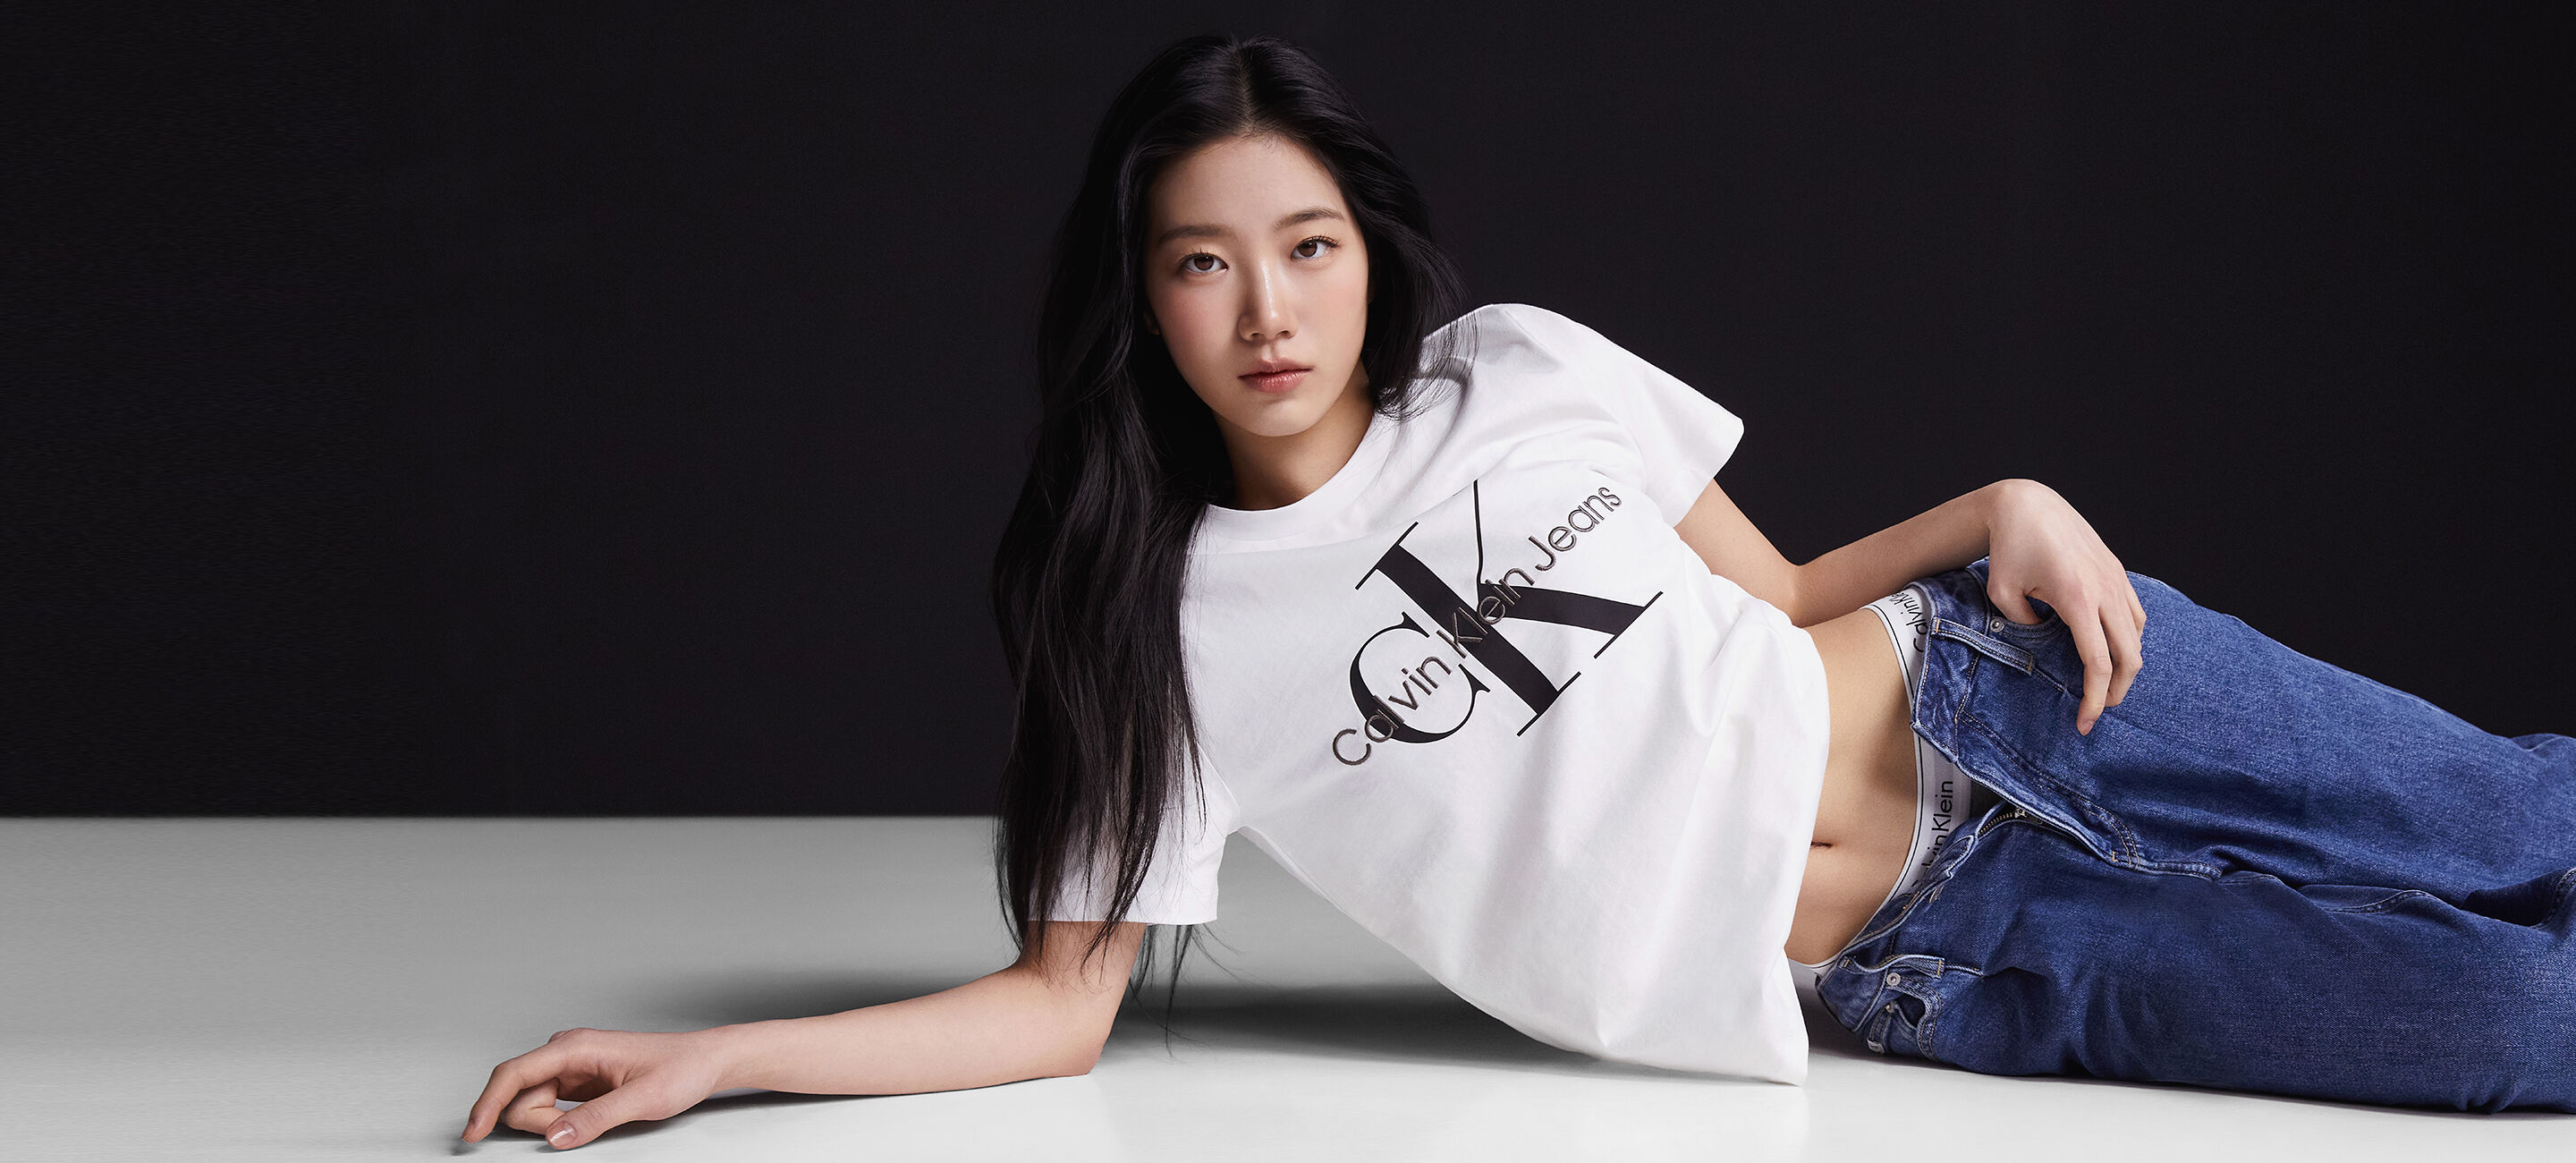 Calvin Klein - Introducing JungKook